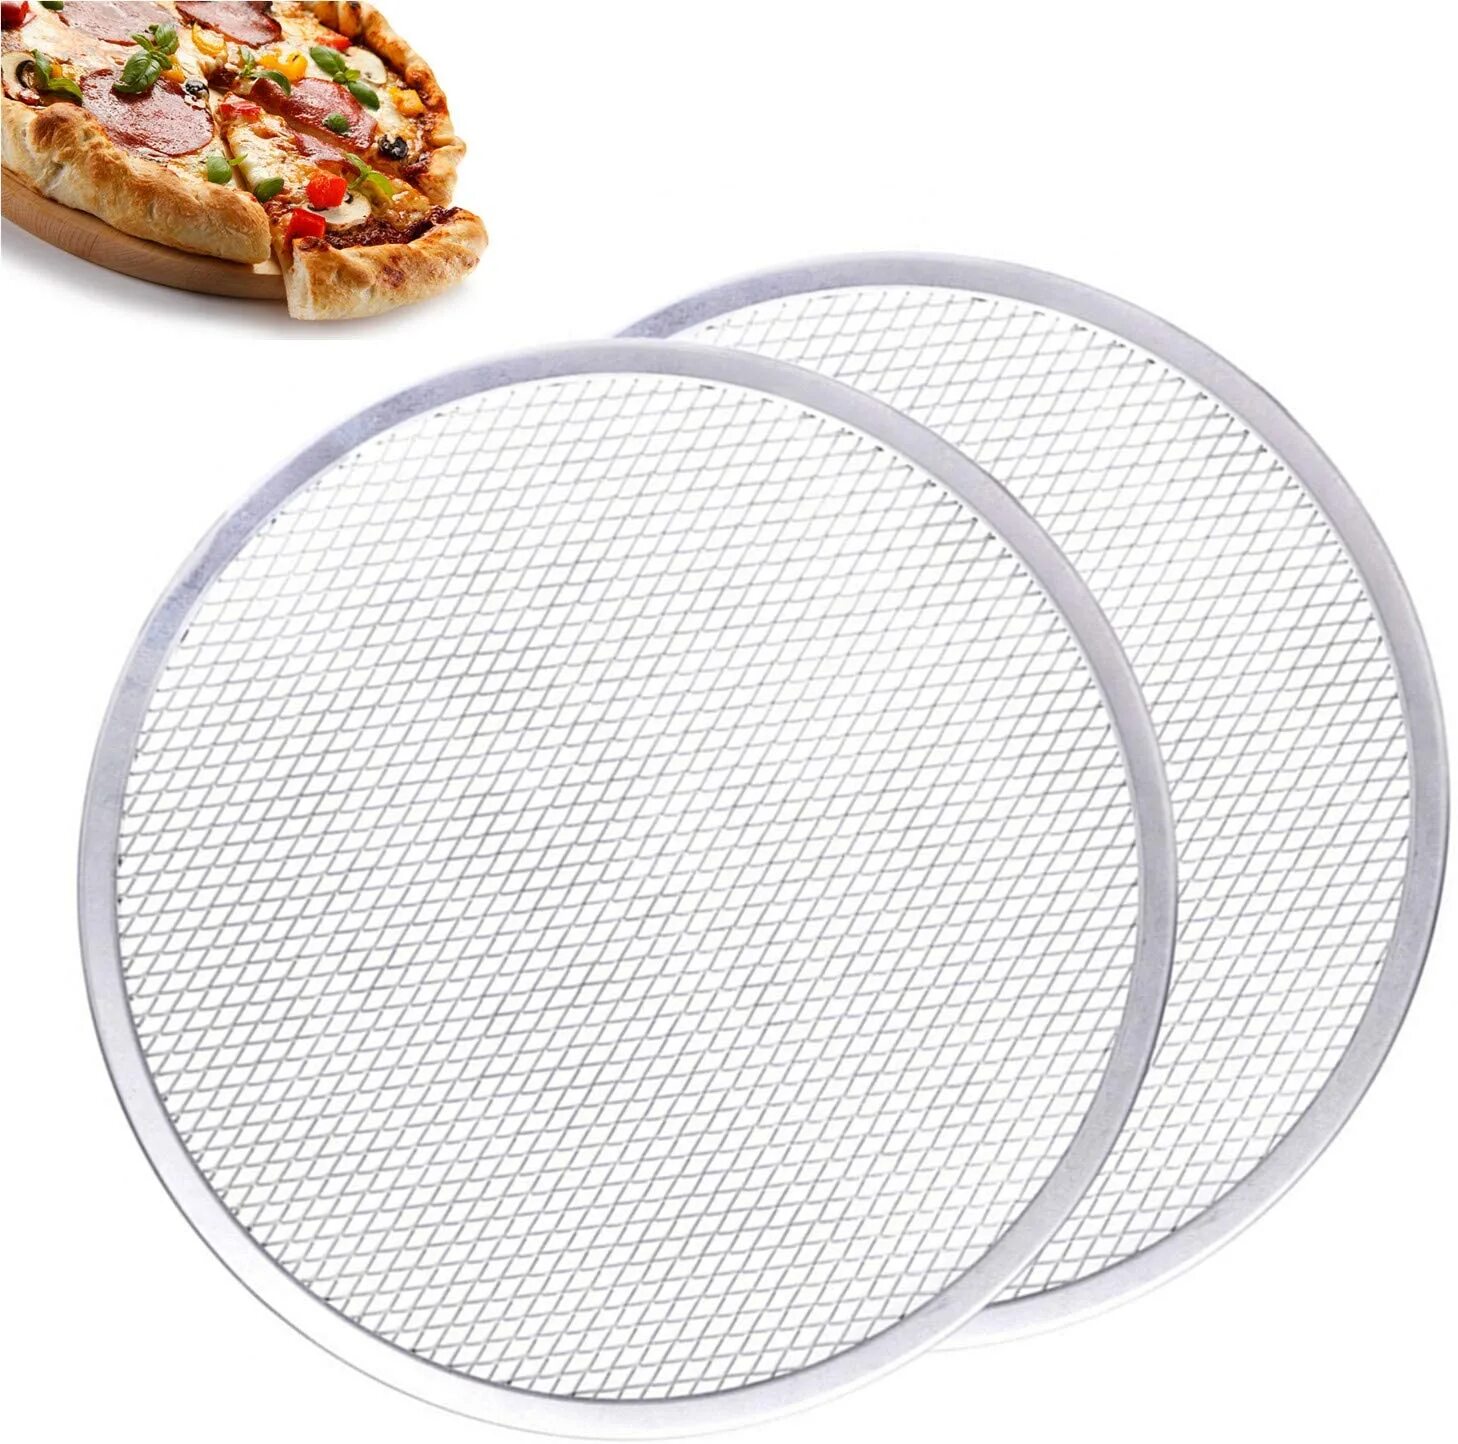 Setka dlya pitsa Stainless Steel pizza Mesh Plate 28sm. Бр-626 сетка для пиццы 14 36 см. Противень-сетка для пиццы d 28см, алюм. Ps11. Бр-625 сетка для пиццы "12" 30 см.